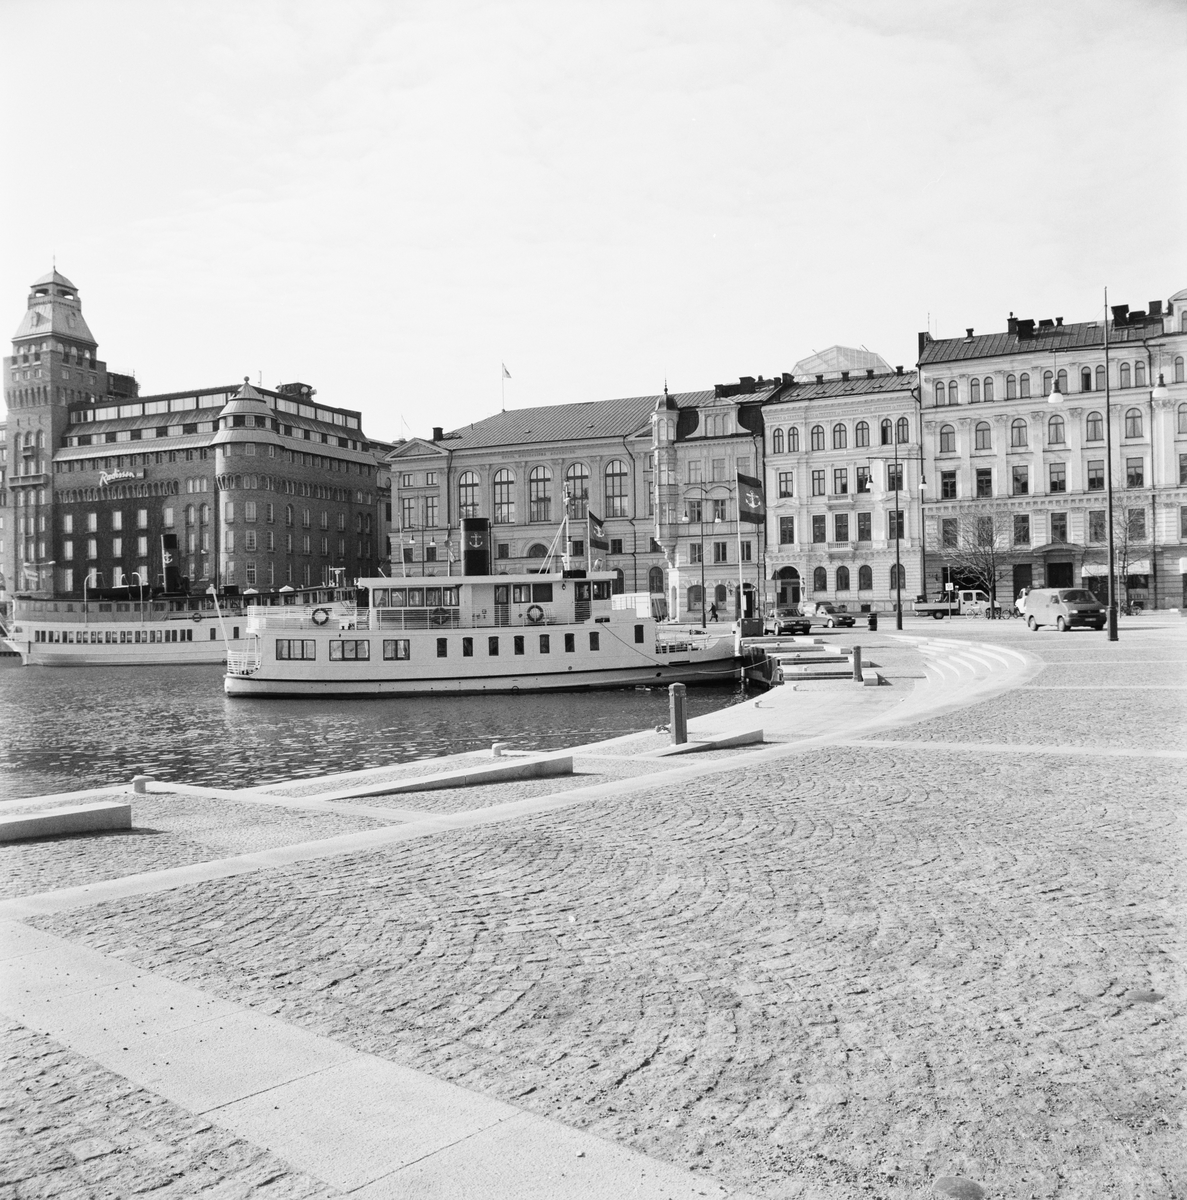 Stockholm längs vattenlinjen
Fotodatum 20020403
Stockholmsresan